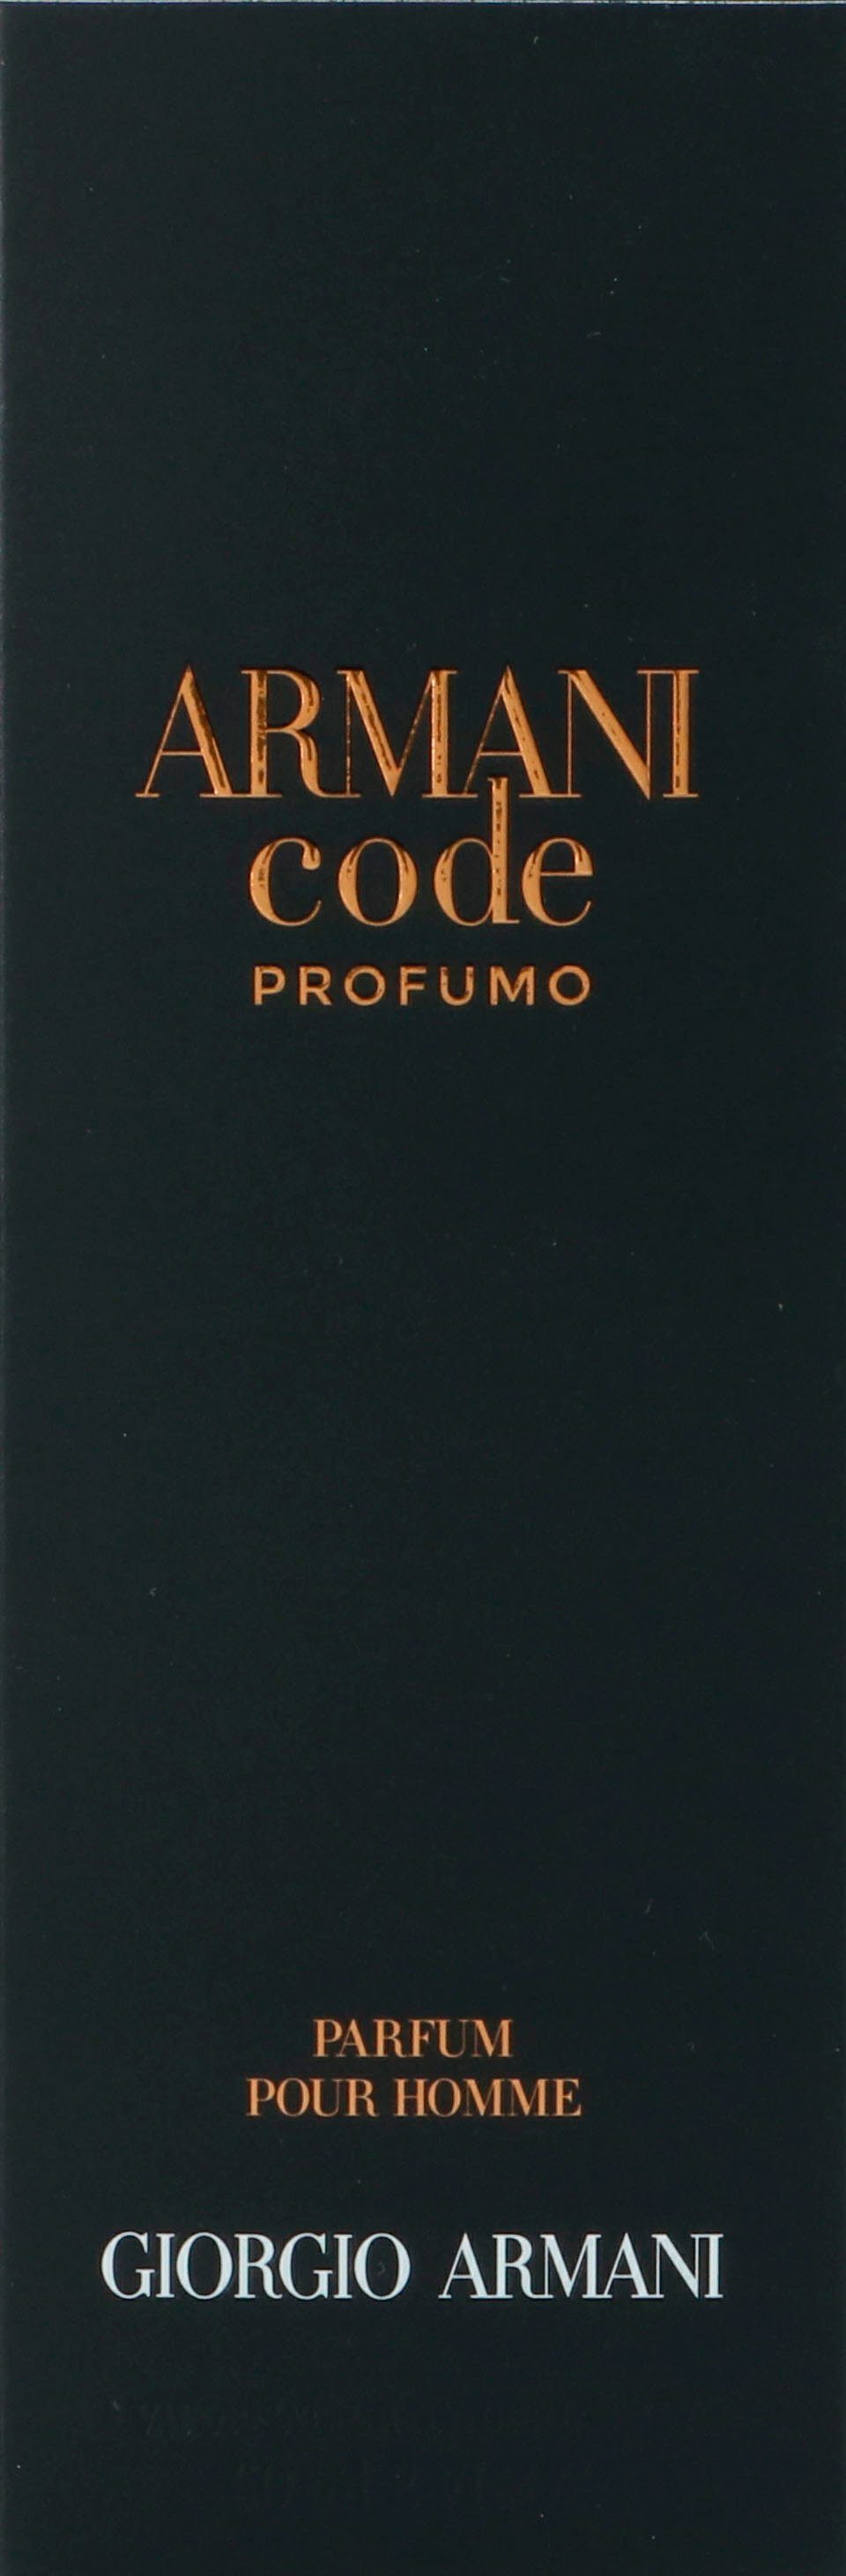 Giorgio Armani Eau de Armani Code Profumo Parfum